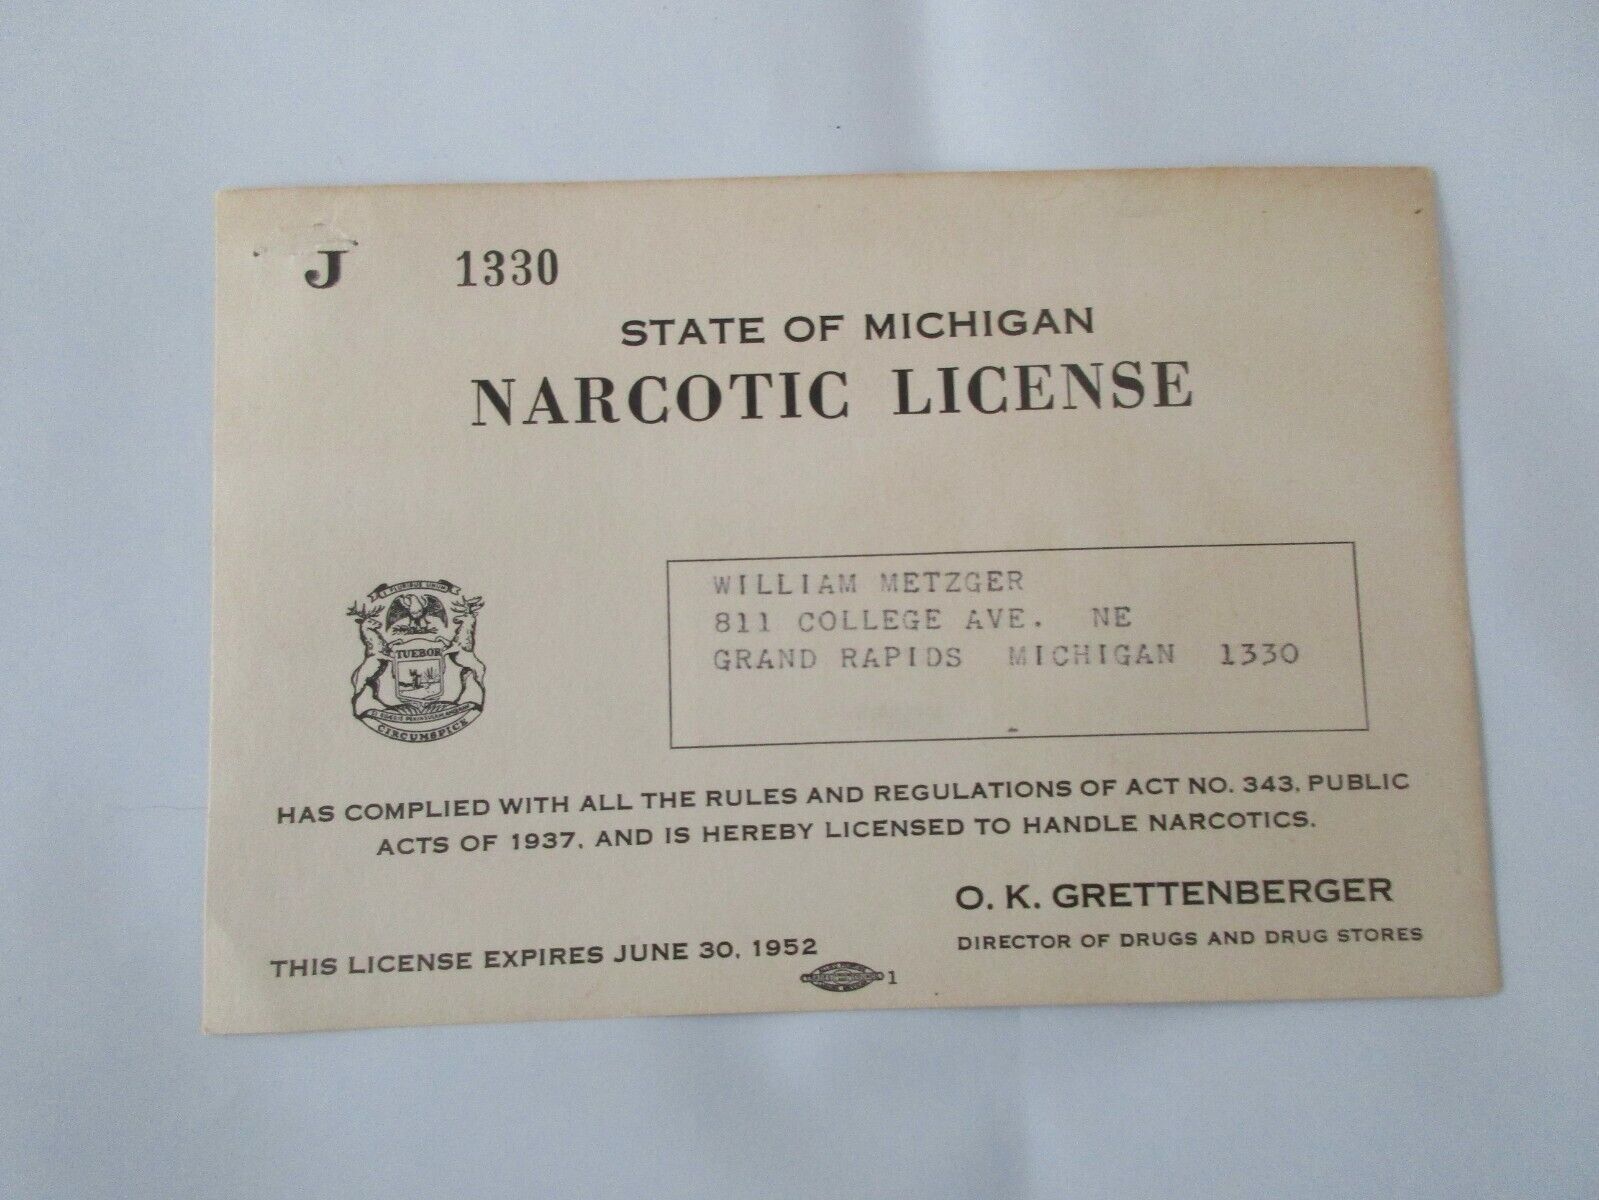 State of Michigan Narcotic License Expires June 3, 1952 - Grand Rapids, Michigan